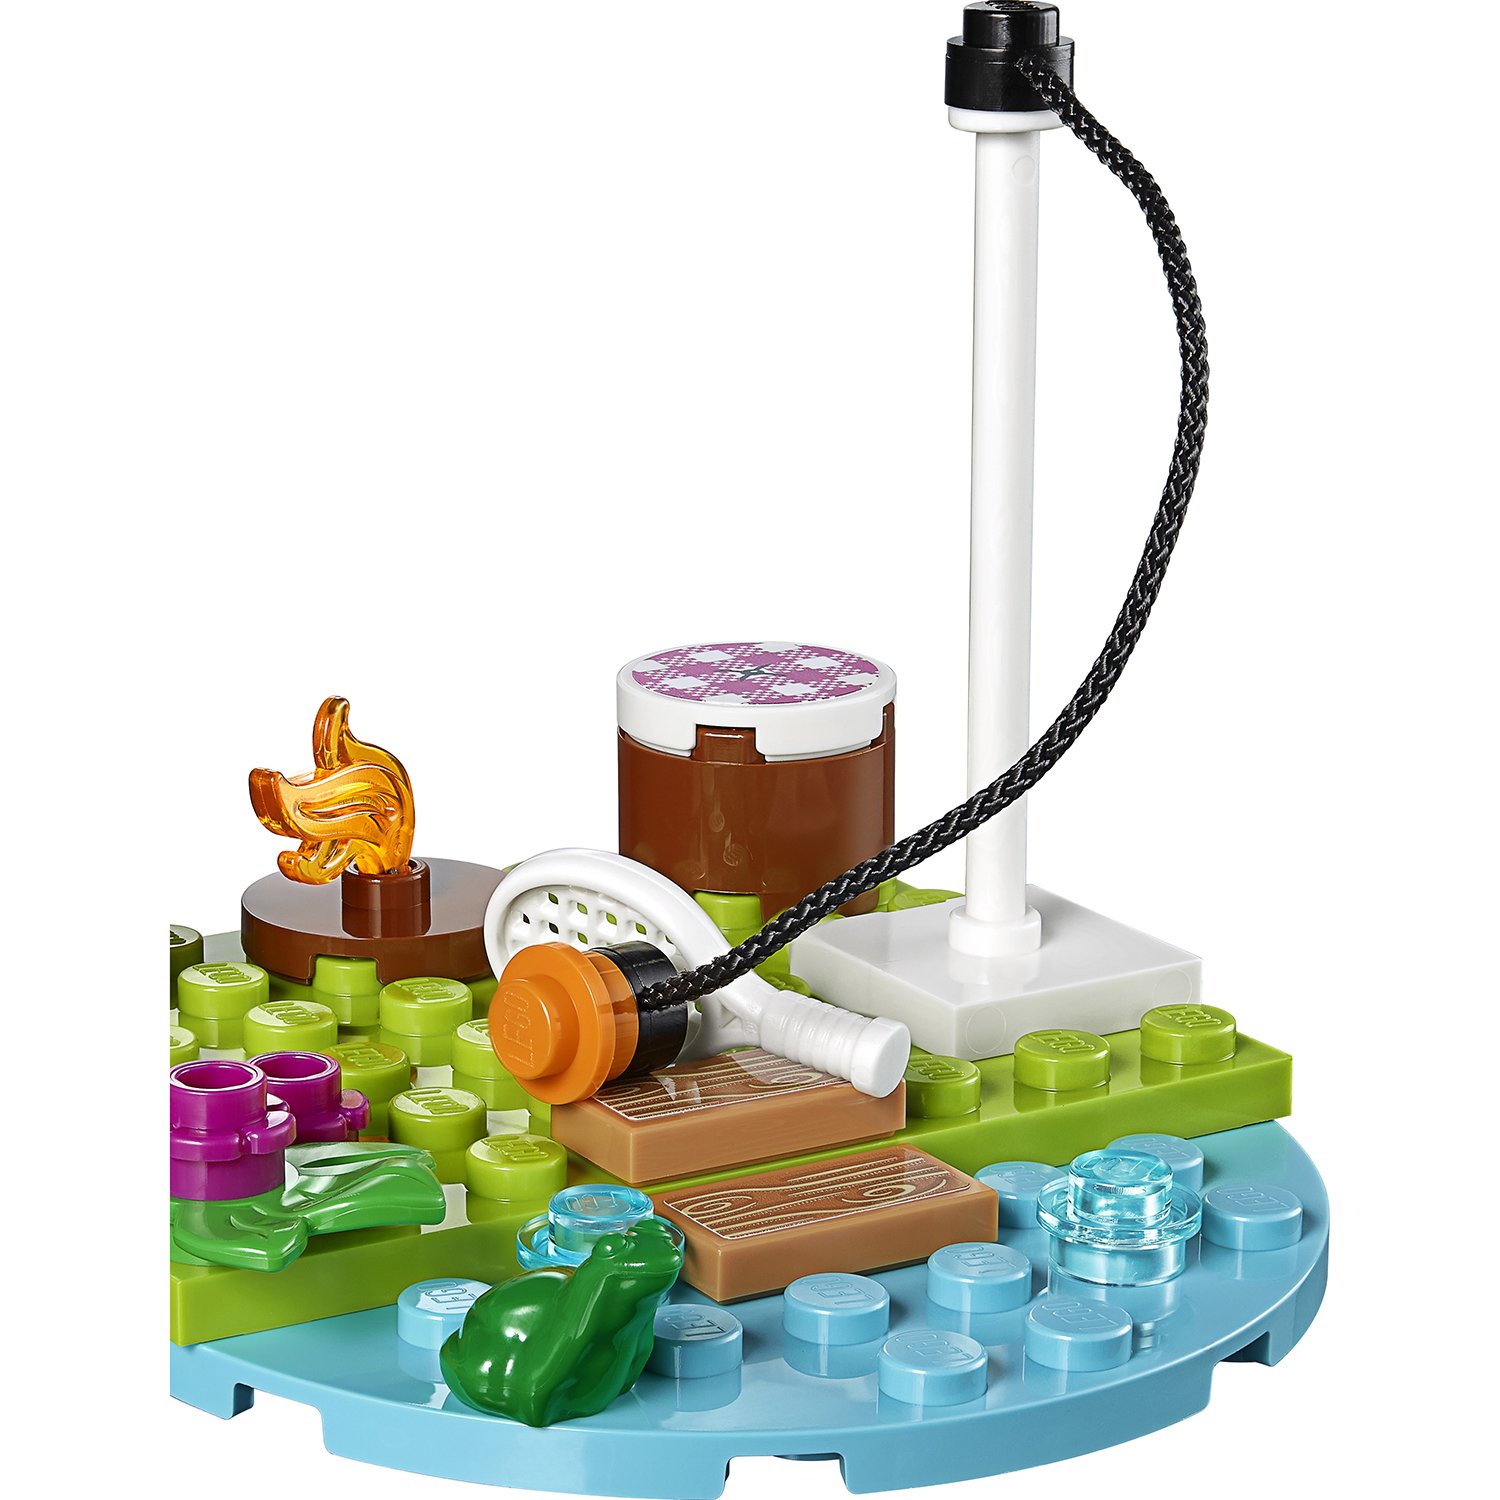 Конструктор Lego® Friends - Багги с прицепом Стефани  